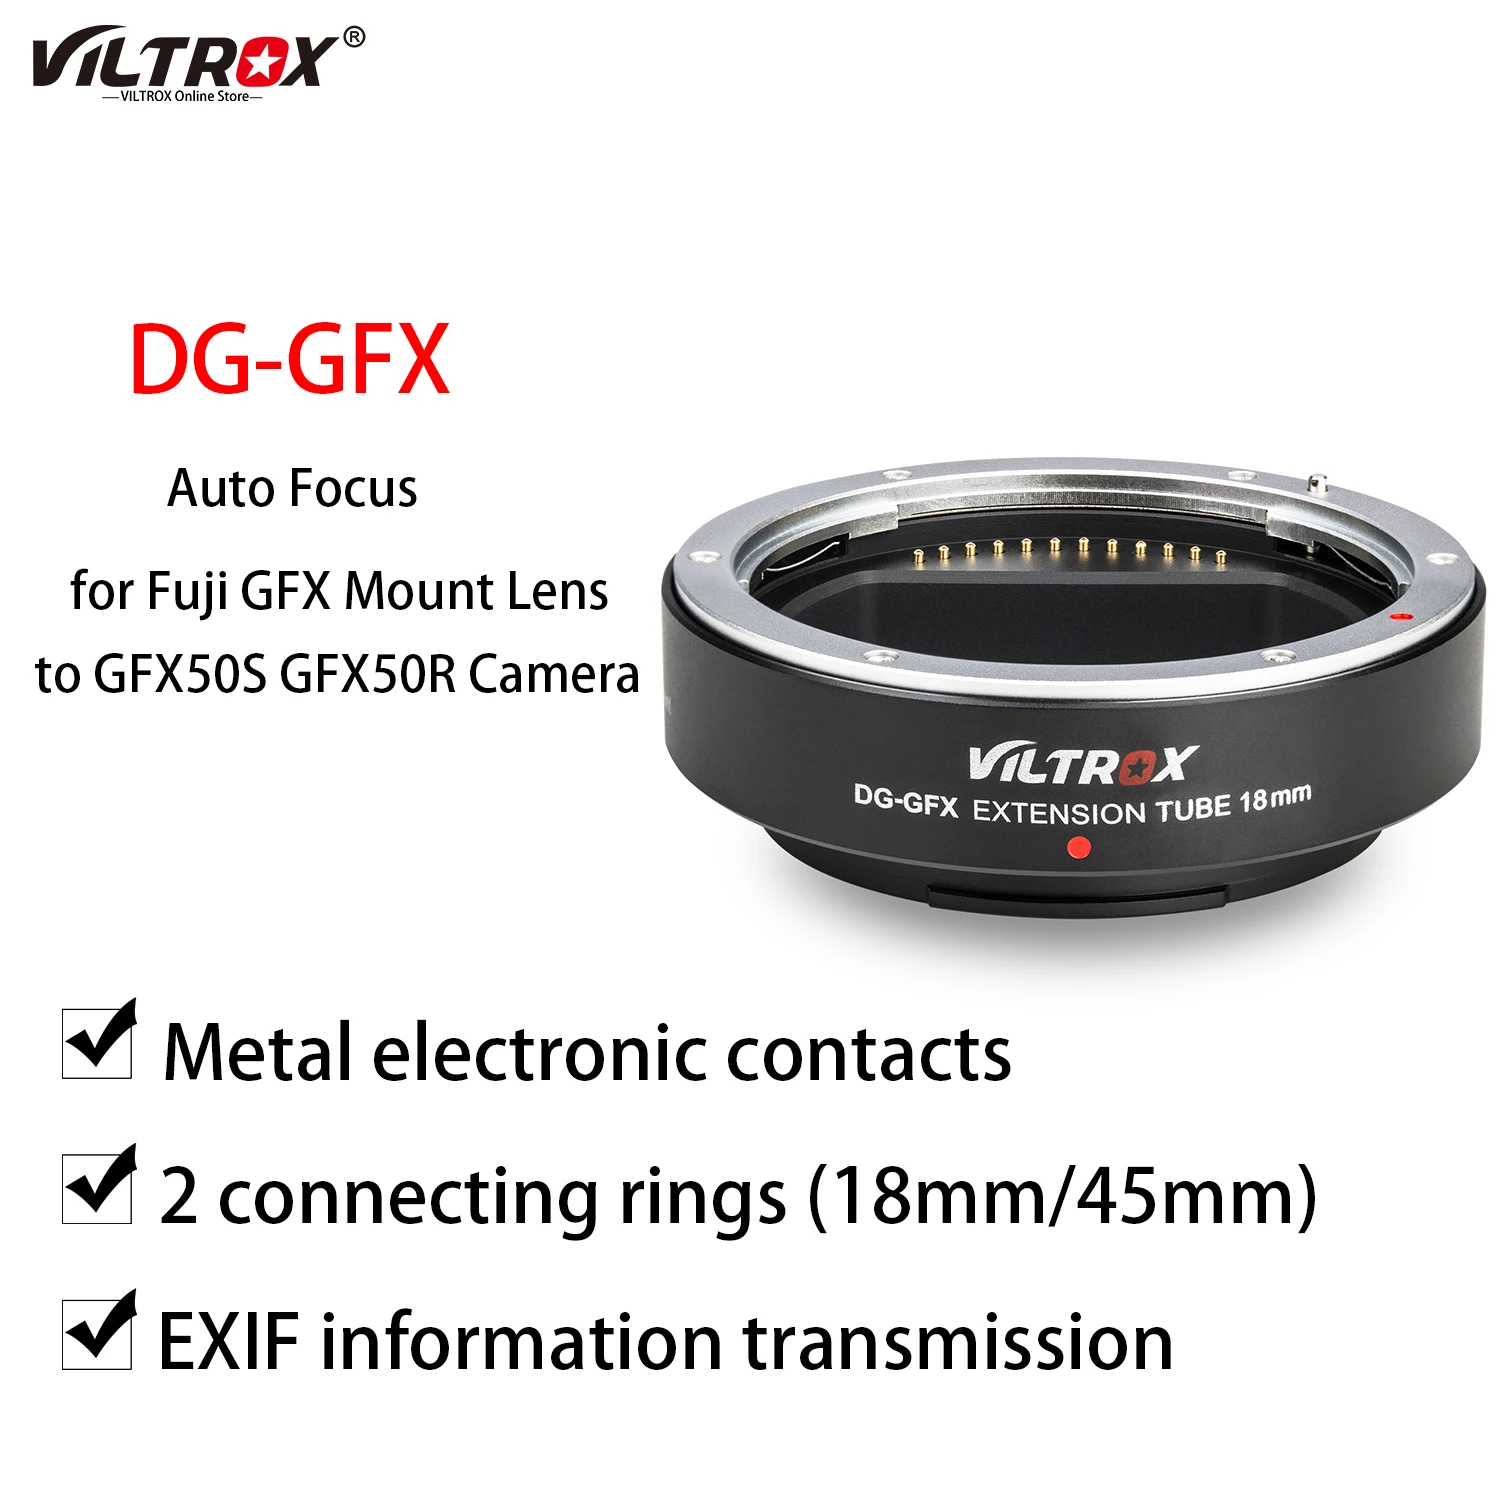 

Кольцо-адаптер VILTROX для объектива с удлинителем для макросъемки, 18 мм, с автофокусом для Fujifil Fuji GFX, объектив и камера GFX50S GFX50R